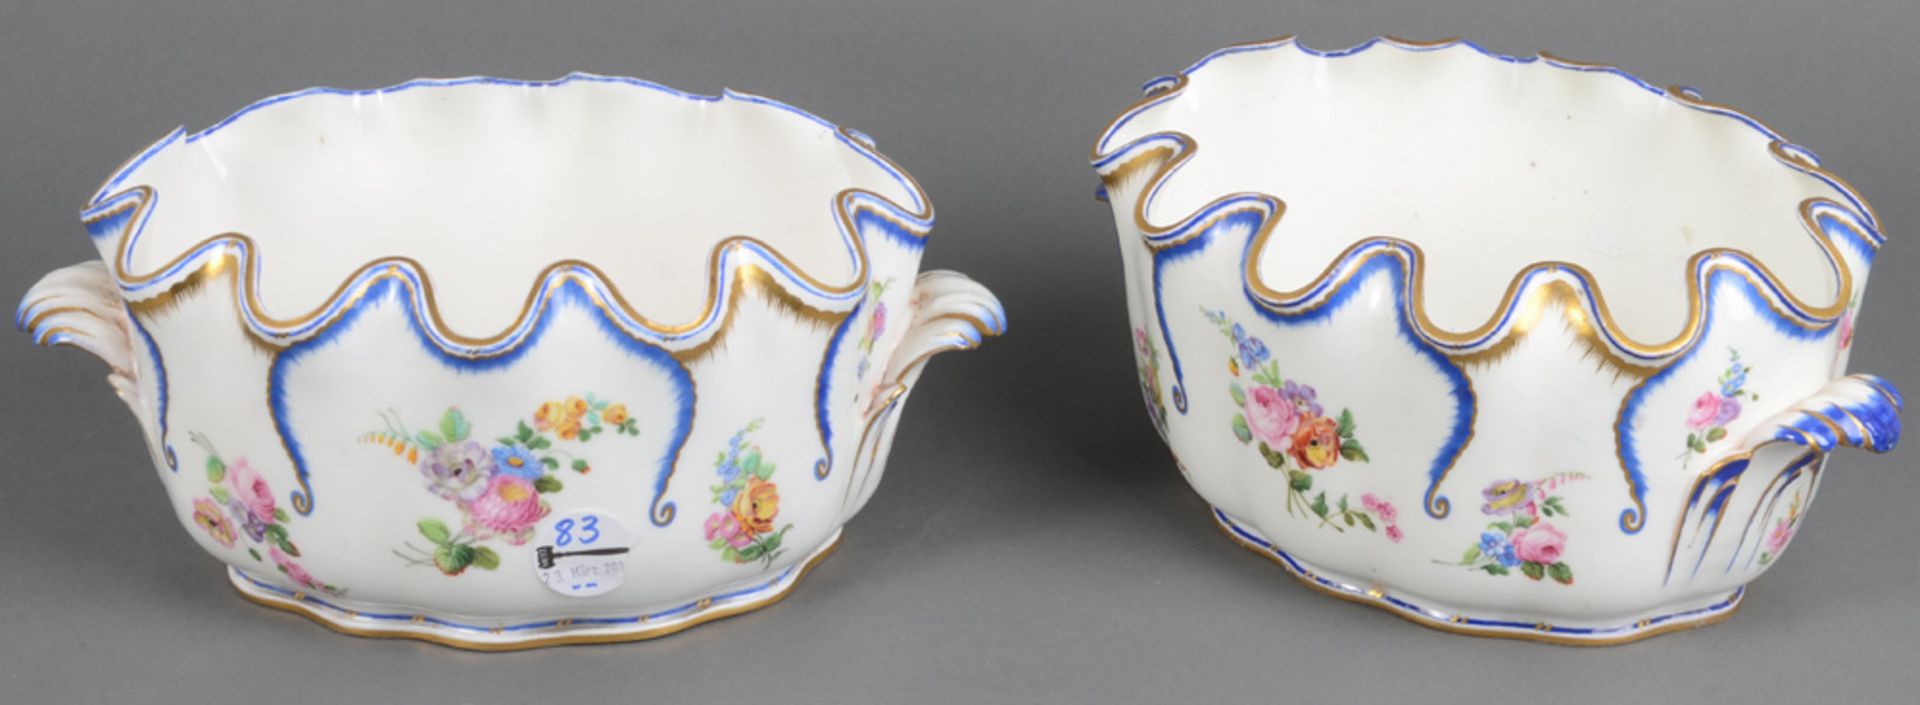 Paar ovale Gläserkühler. Sèvres 18. Jh. Porzellan, bunt floral bemalt, mit blau-goldenem Rand; am